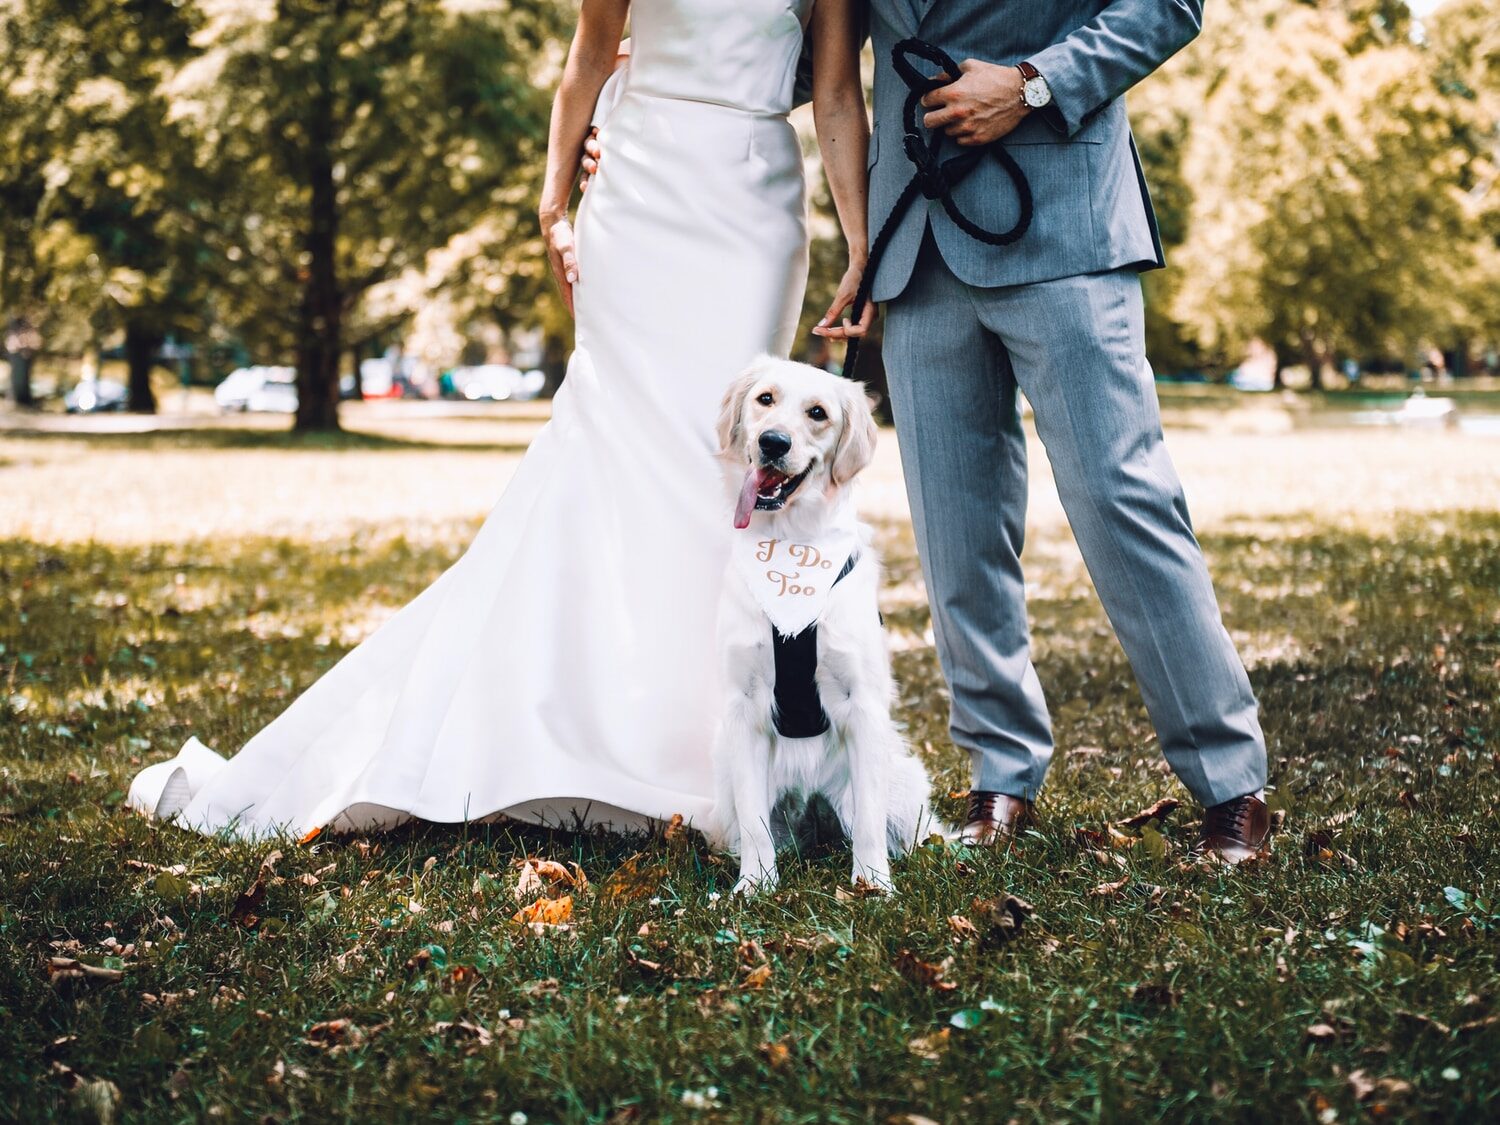 man and woman holding white short coated dog